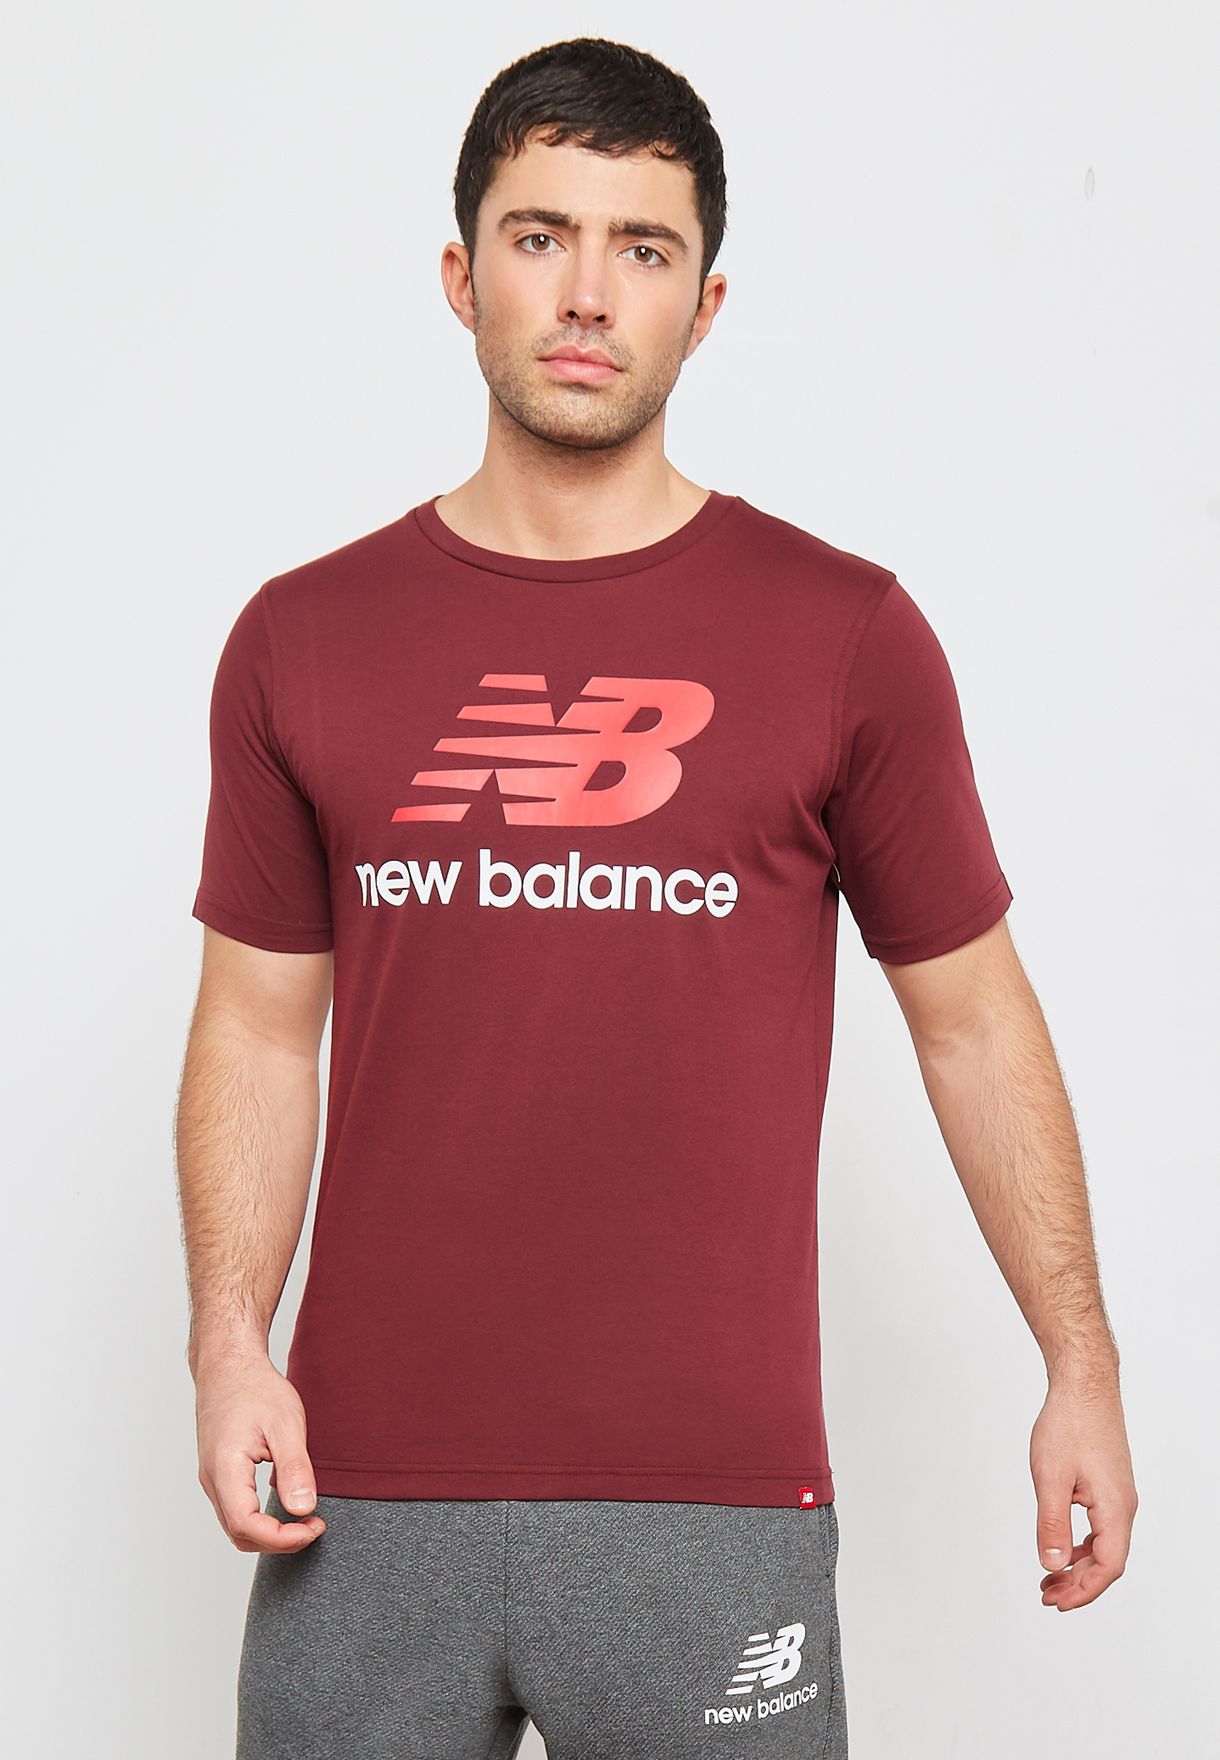 burgundy new balance shirt